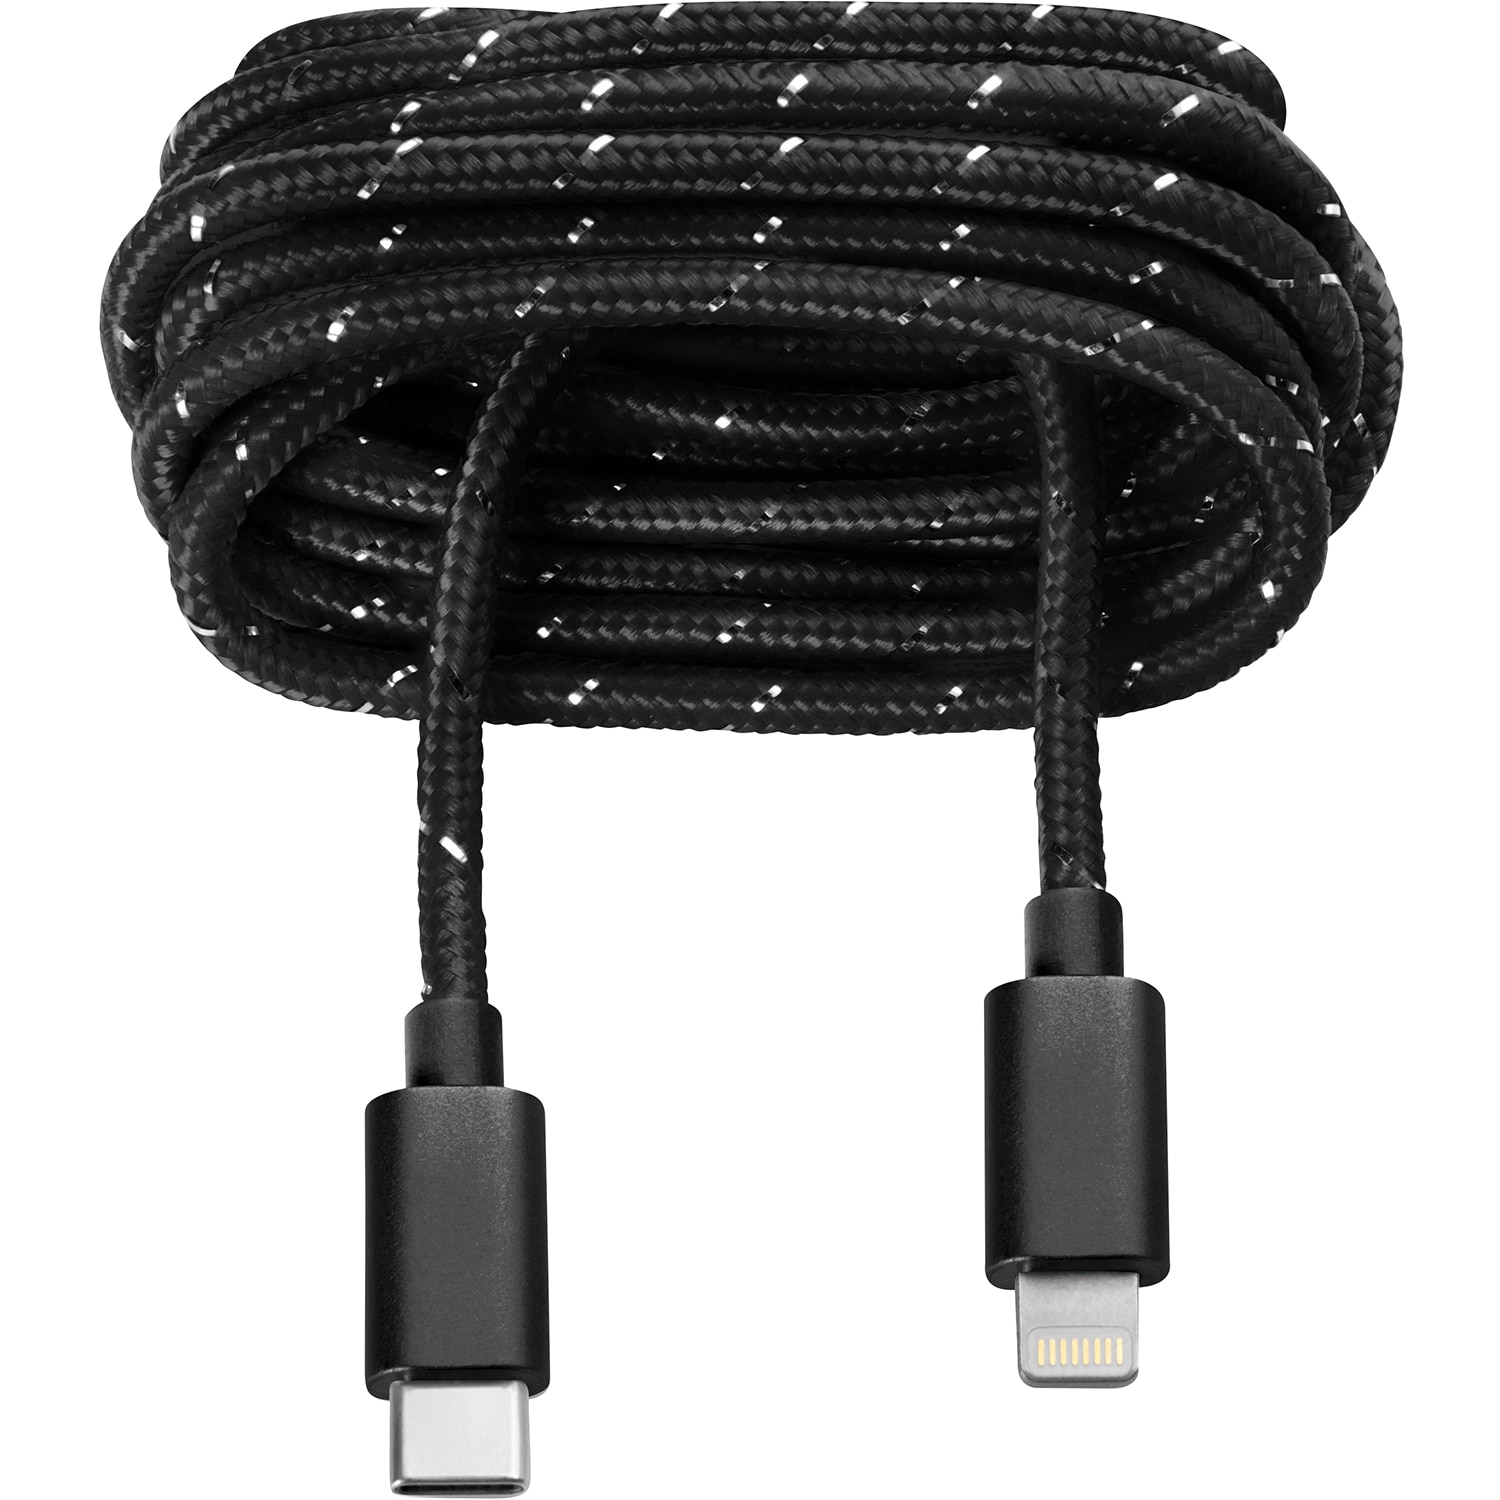 Cable USB a Lightning - Madratek™ Tienda Oficial